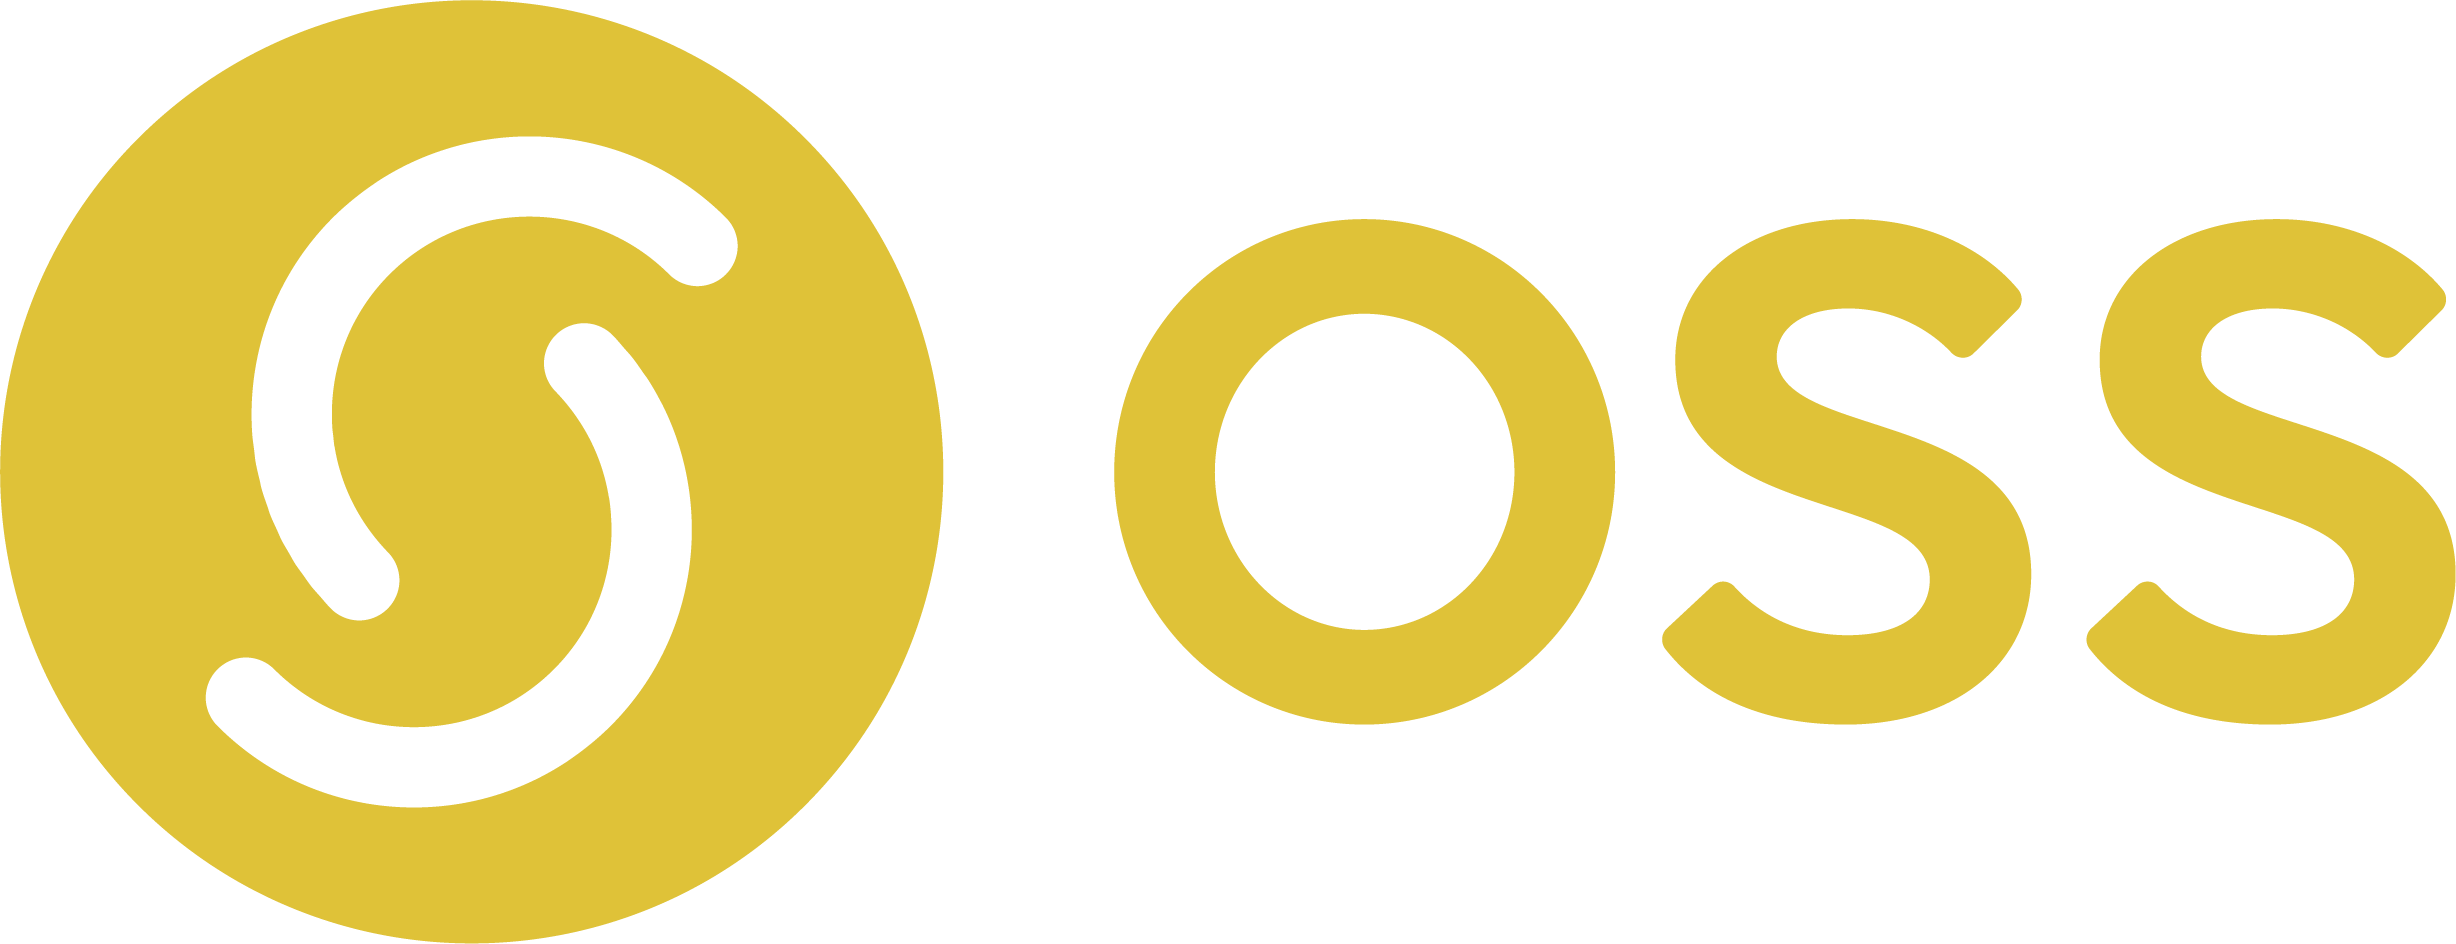 oss_logo_citron